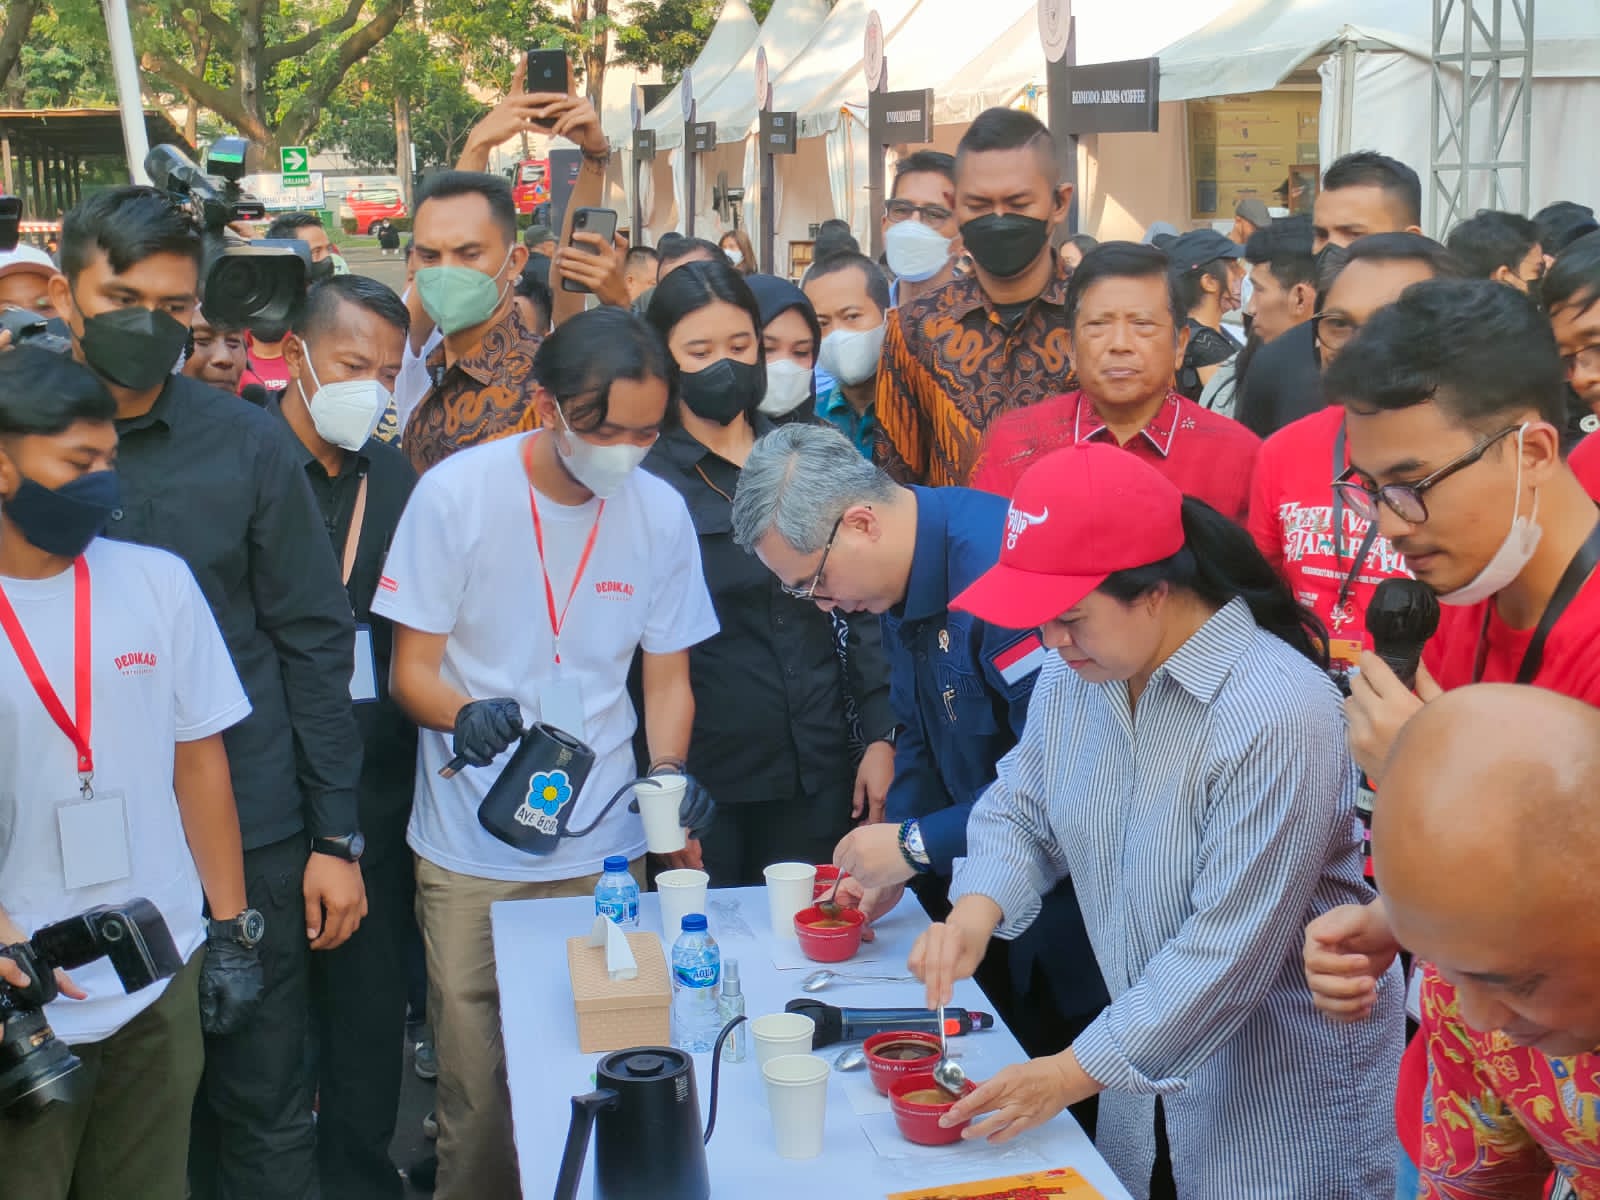 Jakarta - Wakil Menteri Pertanian (Wamentan), Harvick Hasnul Qolbi turut hadir dalam pembukaan Festival Kopi Tanah Air 2022 yang digelar di Parkir Timur Gelora Bung Karno (GBK) Senayan, Jakarta, Jumat (27/5/2022). Acara itu merupakan rangkaian kegiatan peringatan HUT PDIP ke-49.  Di acara itu, hadir Menteri Koperasi dan UKM, Teten Masduki serta Sekjen DPP PDIP Hasto Kristiyanto bersama jajaran DPP PDIP lainnya seperti Sukur Nababan, Mindo Sianipar, Ribka Tjiptaning, Djarot Saiful Hidayat dan Wiryanti Sukamdani.  Hadir juga jajaran anggota fraksi PDIP seperti Sudin (Ketua Komisi IV DPR), Charles Honoris, Dolfie OVP, Gus Nabil Haroen, Vita Ervina, Masinton Pasaribu, Trimedya Panjaitan, Krisdayanti, Adian Napitupulu dan Aria Bima.  Dalam kesempatan itu, Wamentan Harvick turut membeberkan potensi kopi Indonesia di pasar Eropa. Menurutnya, Indonesia memiliki peluang untuk memasarkan produk kopinya di Eropa. Sebab kebutuhan kopi di sana mencapai 500 ribu ton.  “Kebutuhan kopi di Eropa itu lebih dari 500 ribu ton, karena pemasok utama itu dari Brazil. Namun saat ini Brazil sedang mengalami penurunan sehingga Indonesia ada peluang,” katanya kepada wartawan.